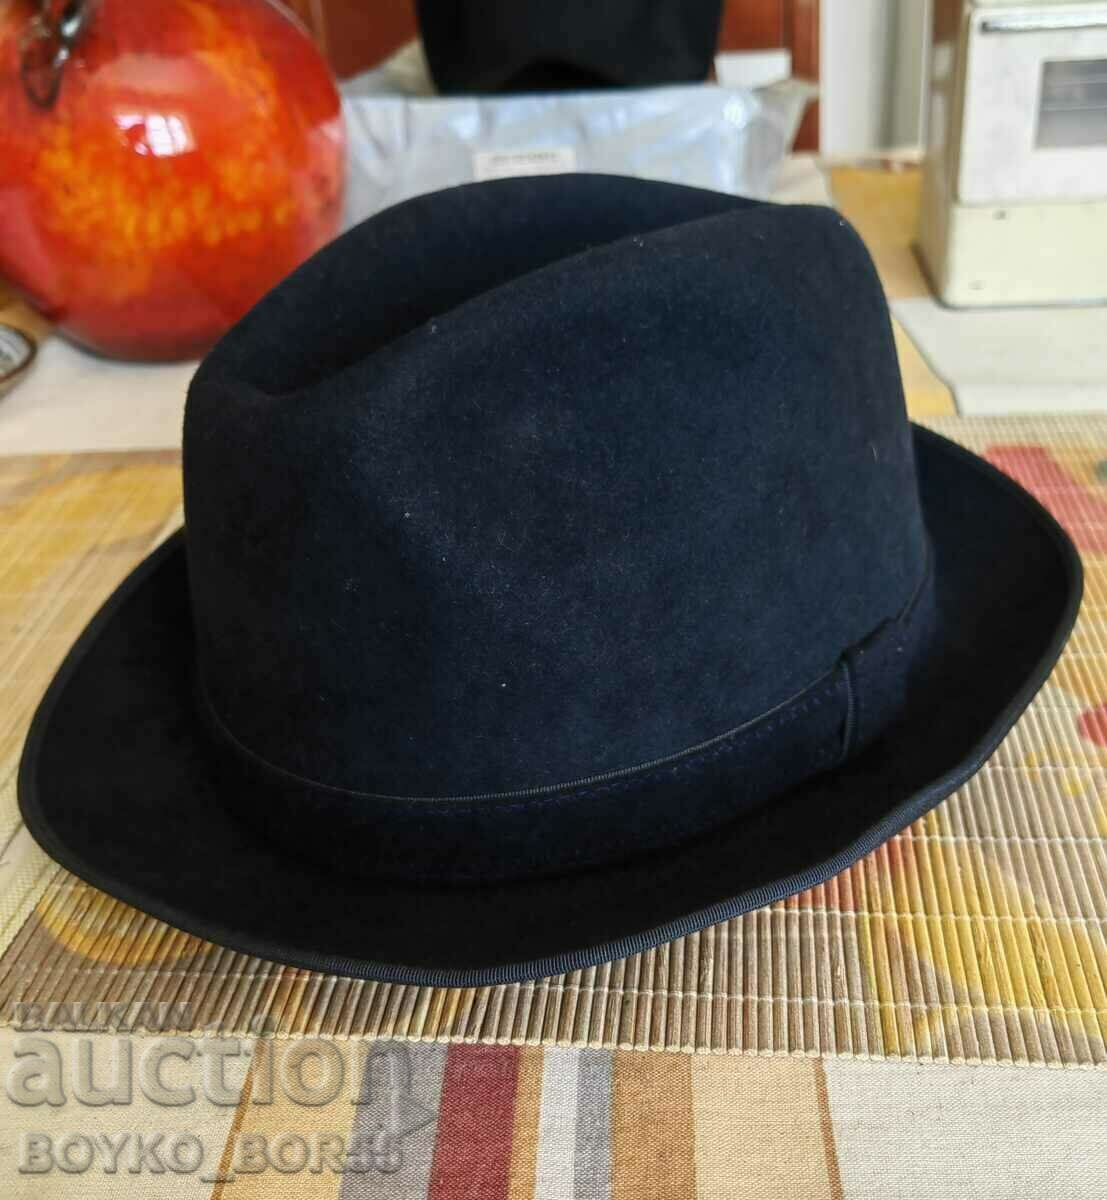 Vintage Luxury English Bombe Rockel Felt Hat